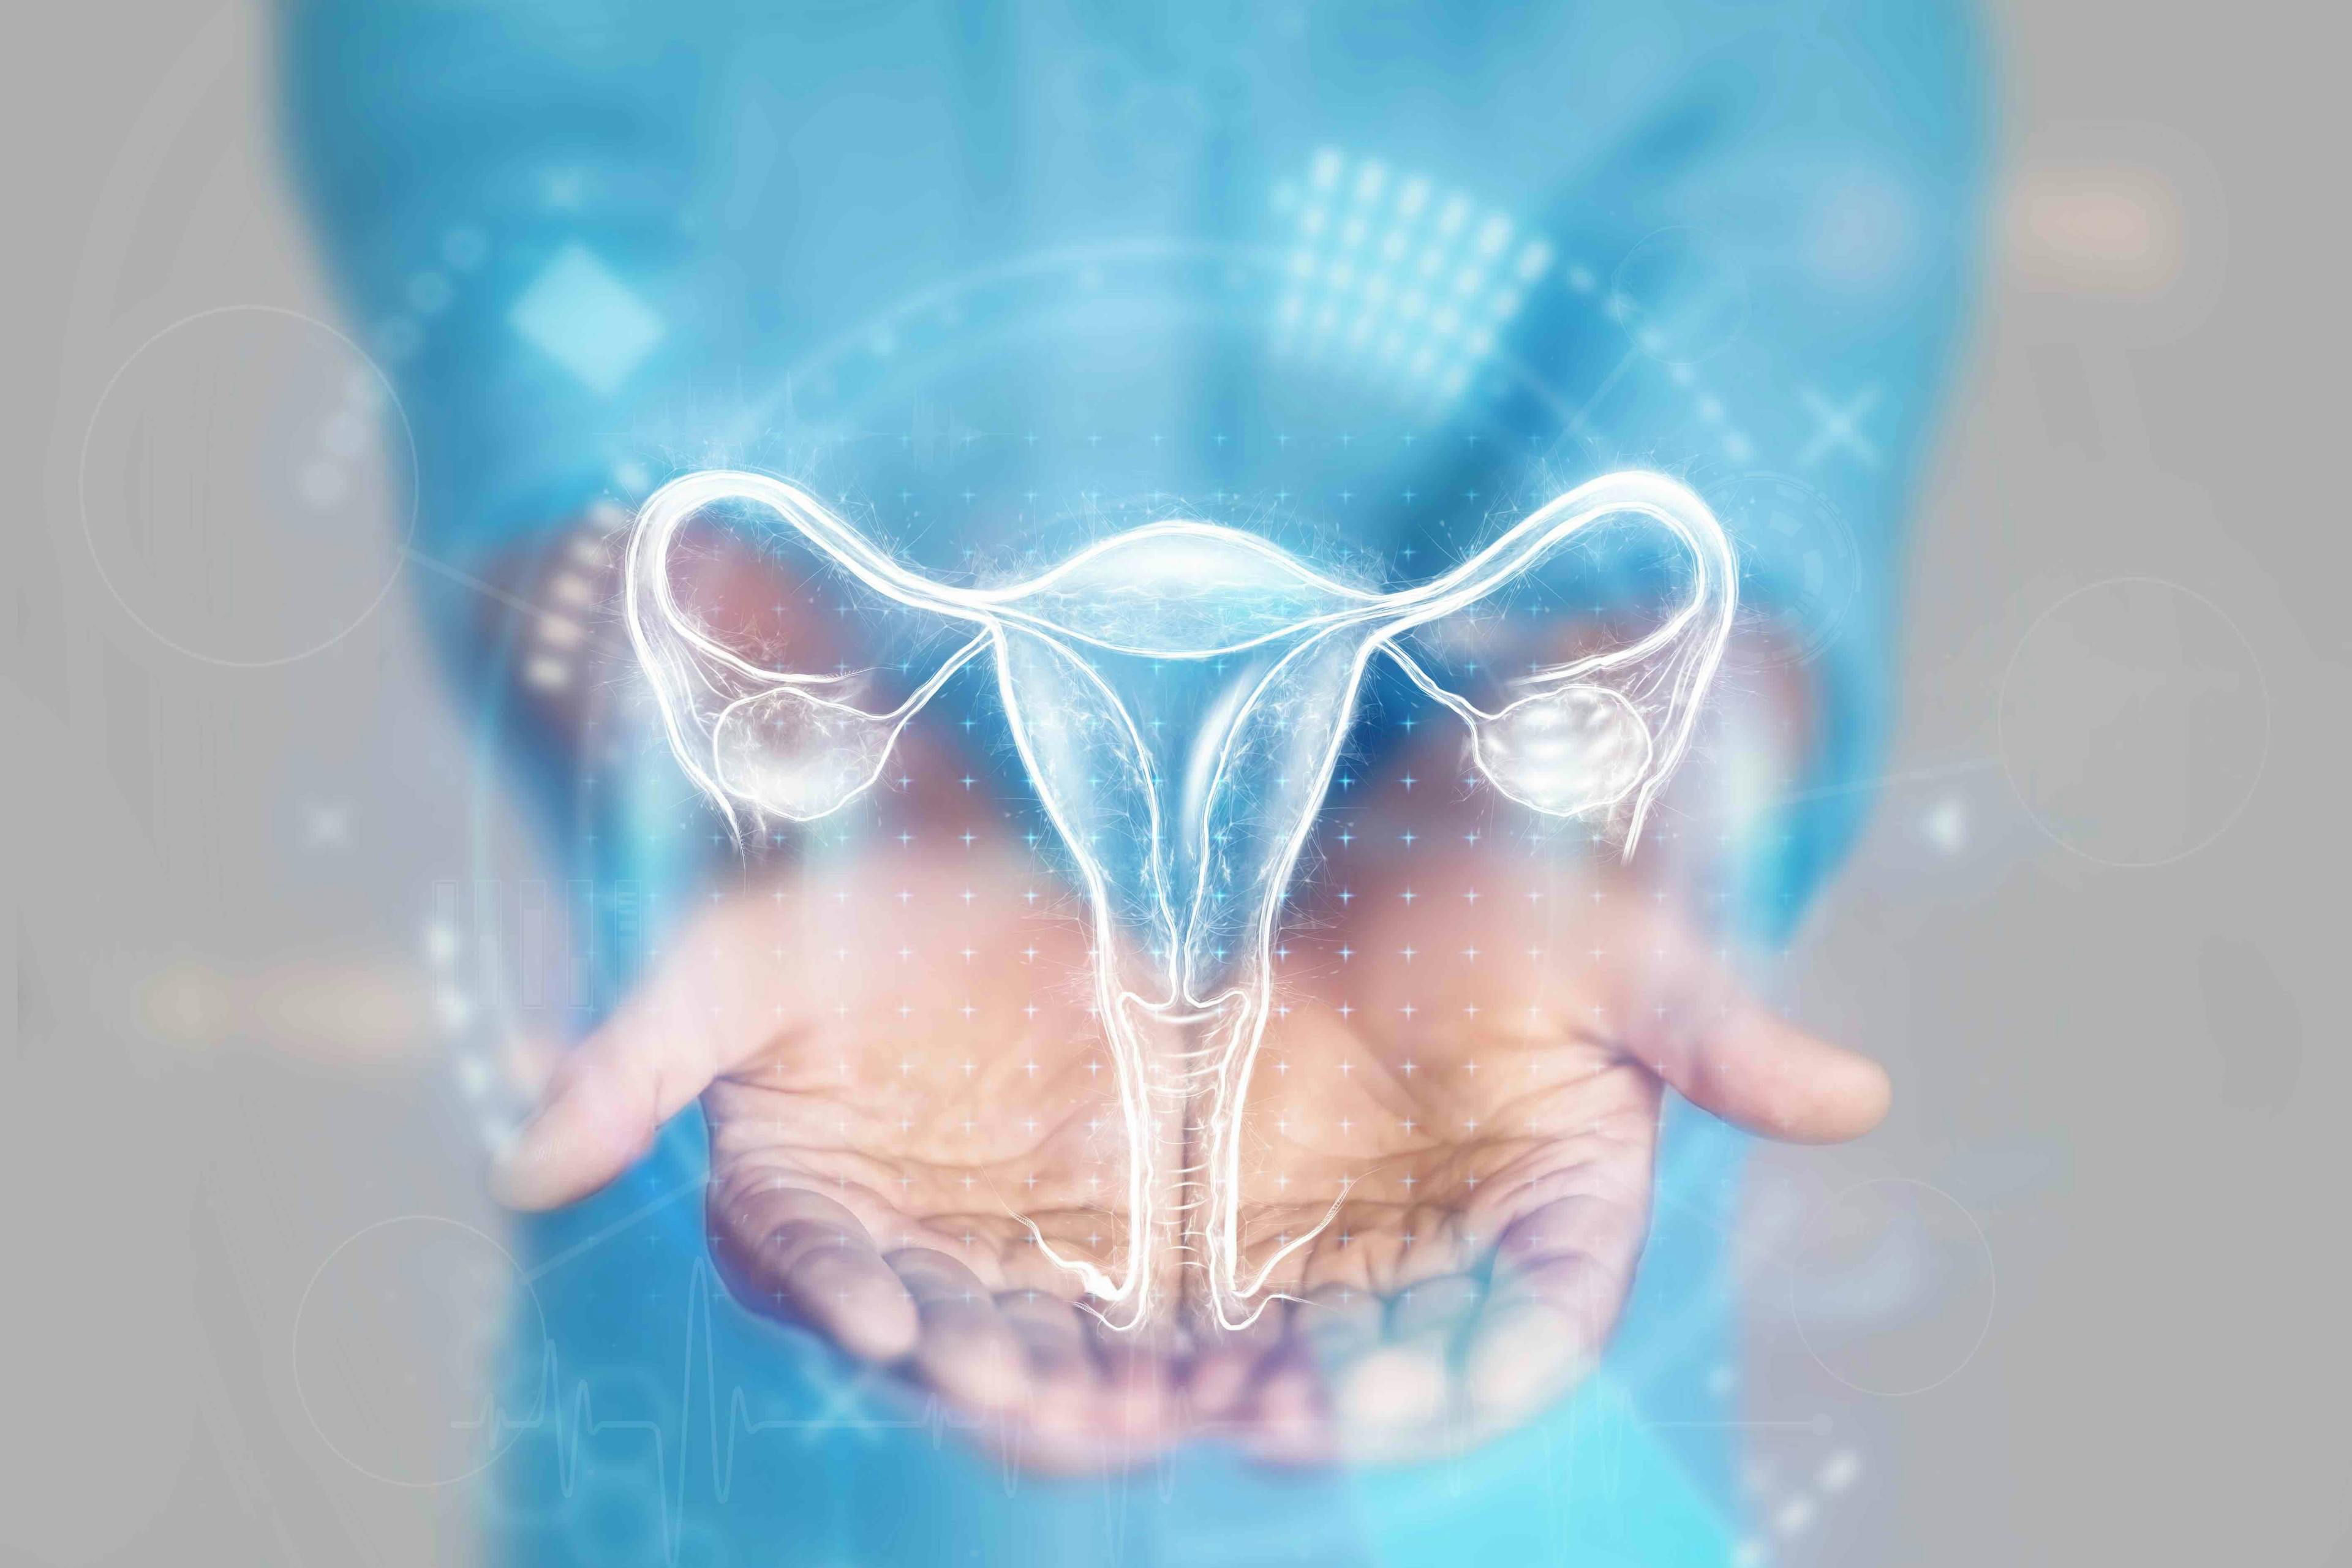 Female reproductive system concept image - Aliaksandr Marko - stock.adobe.com